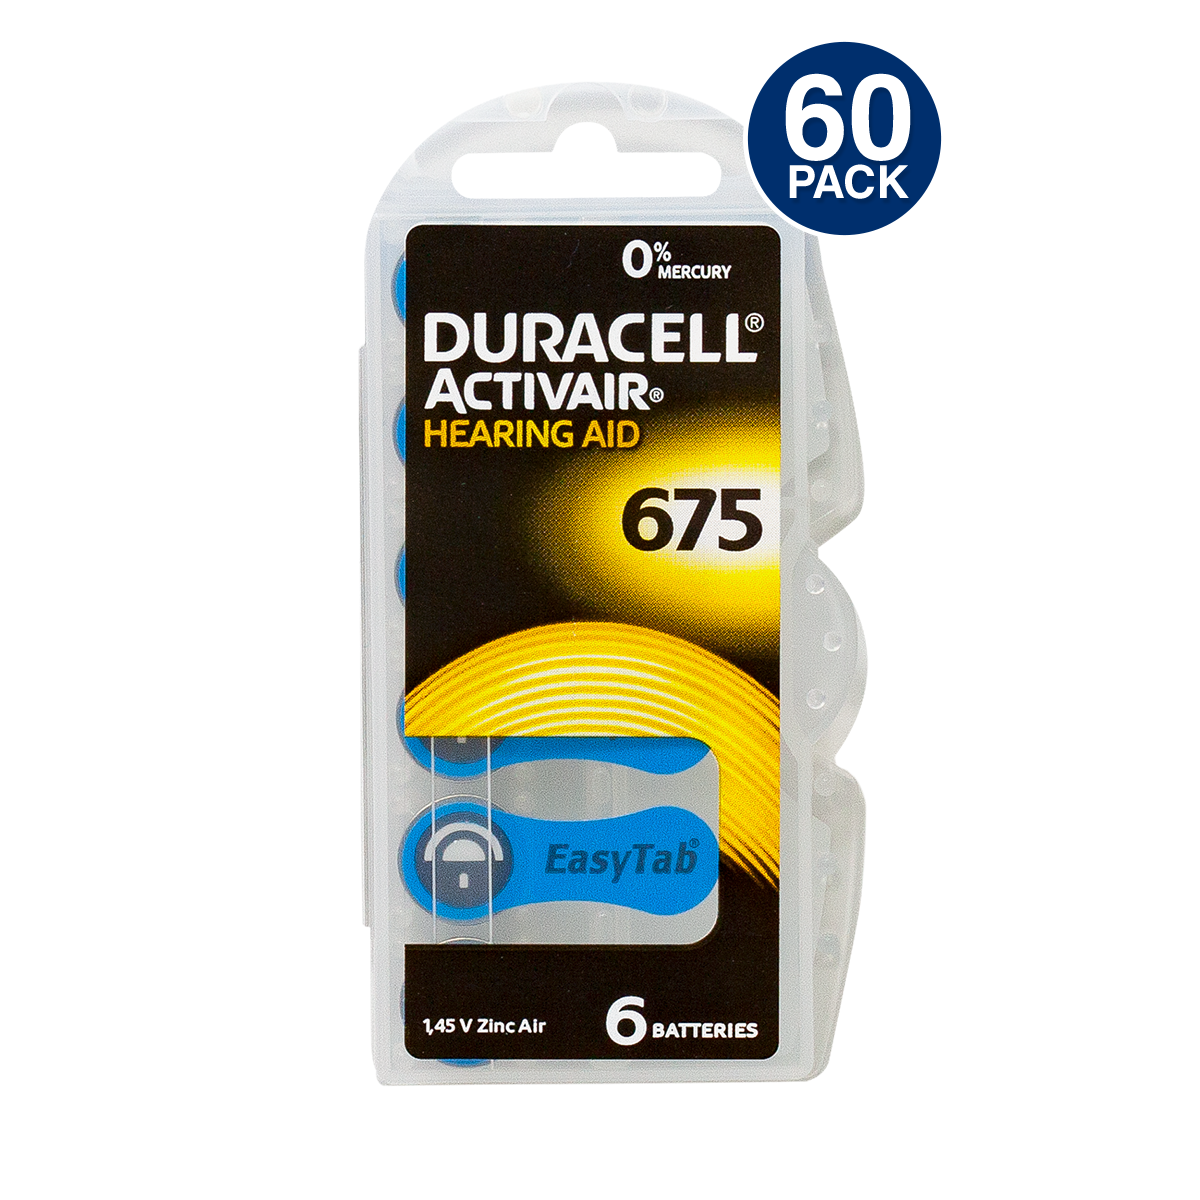 Duracell Activair 675 Hearing Aid Battery (60 PCS)